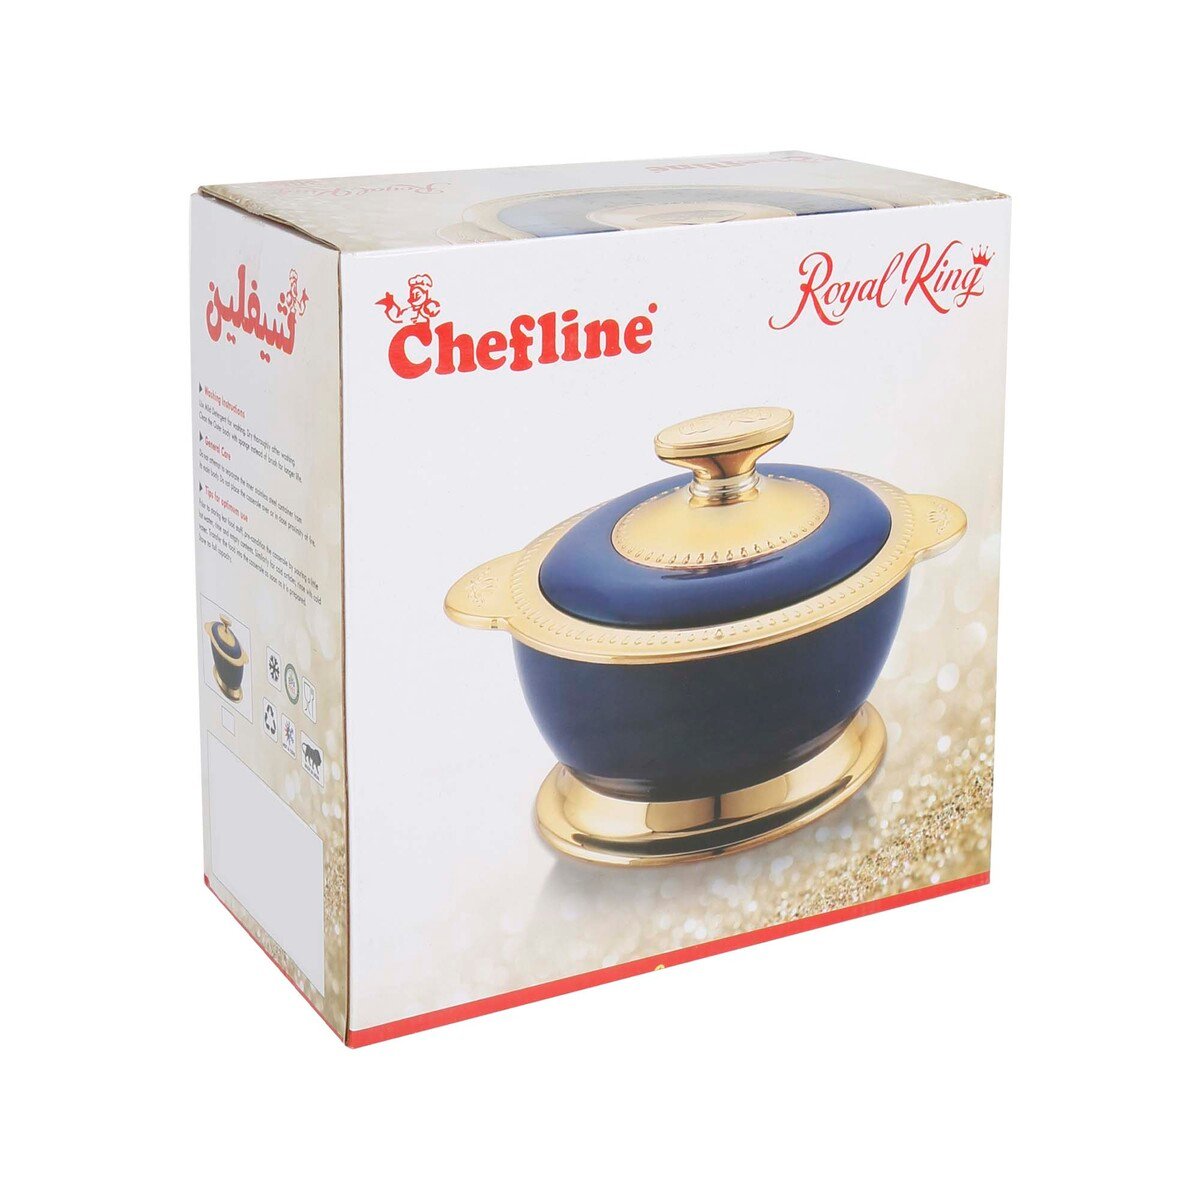 Chefline Plastic Insulated Hot Pot Royal King, 3000 ml